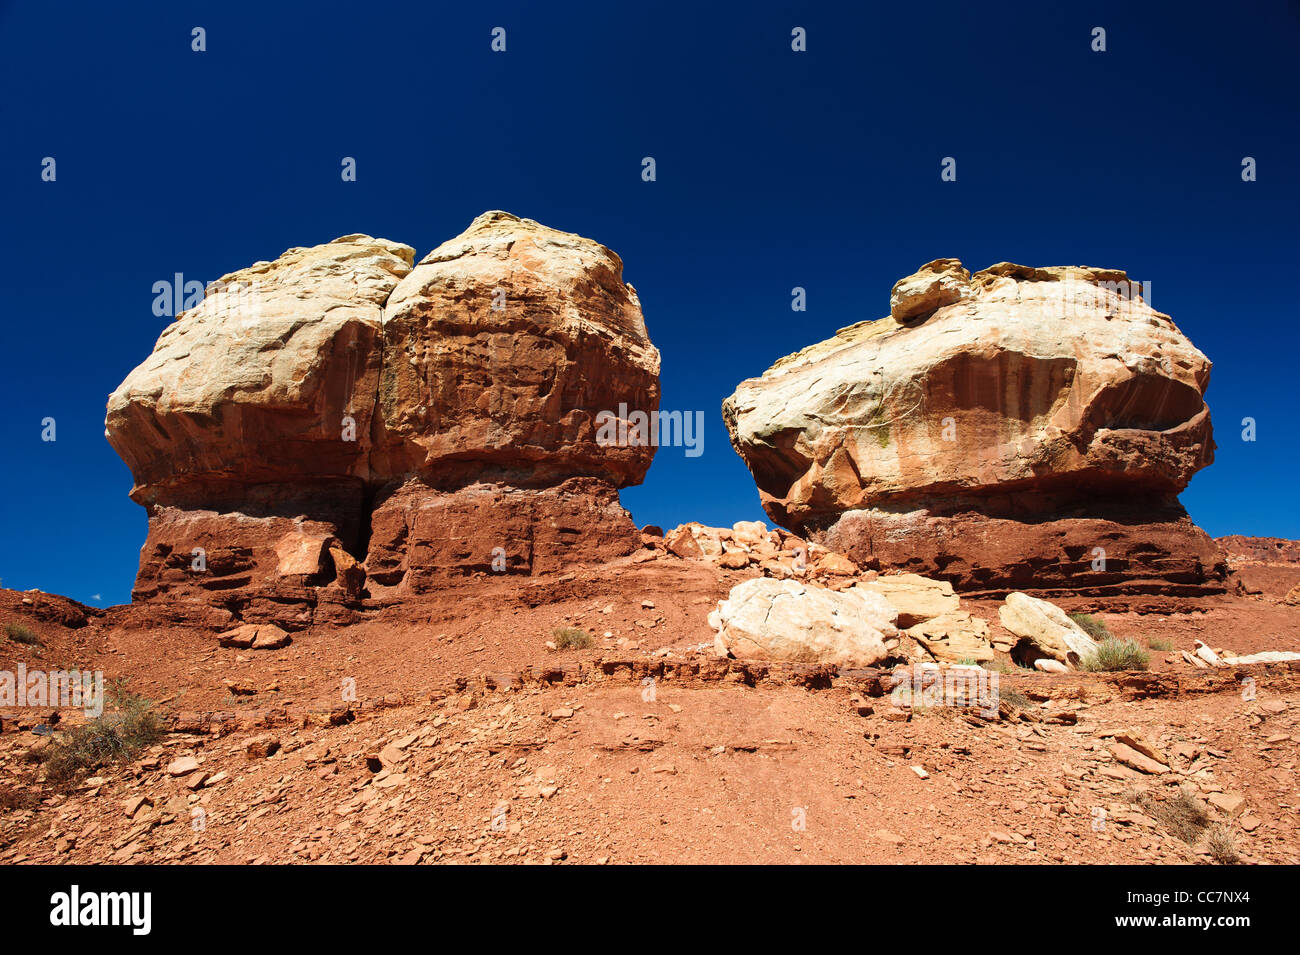 Twin Rocks, Capitol Reef National Park, Utah, USA Banque D'Images